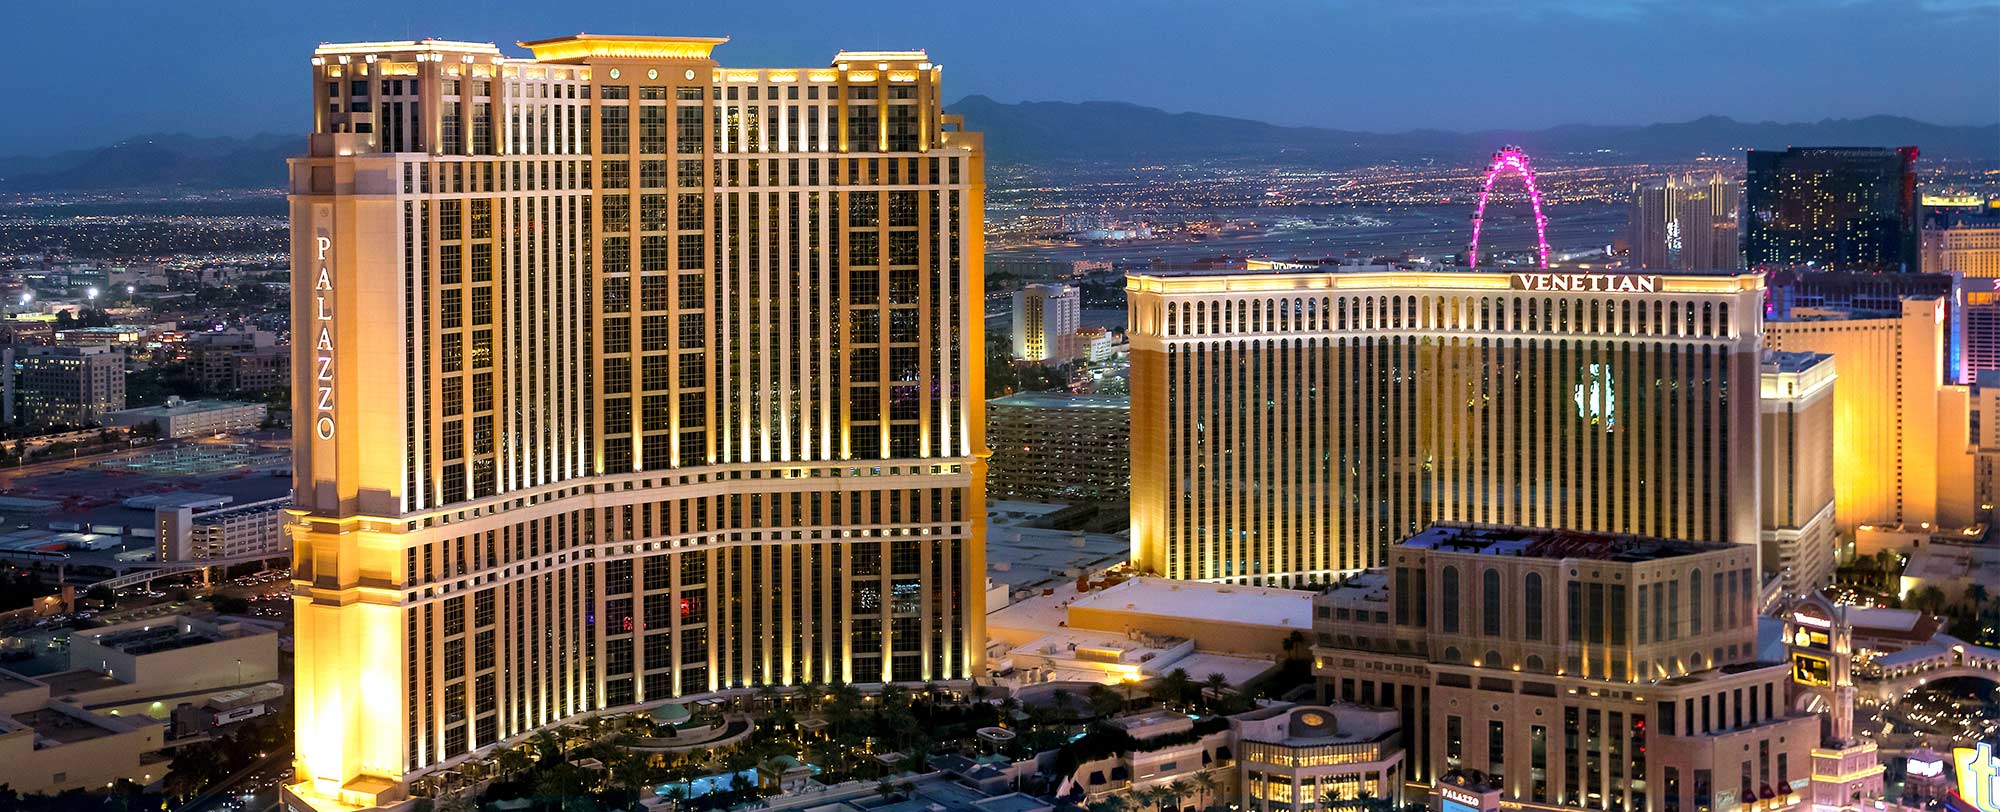 The Venetian® Las Vegas | Luxury Hotels in Vegas